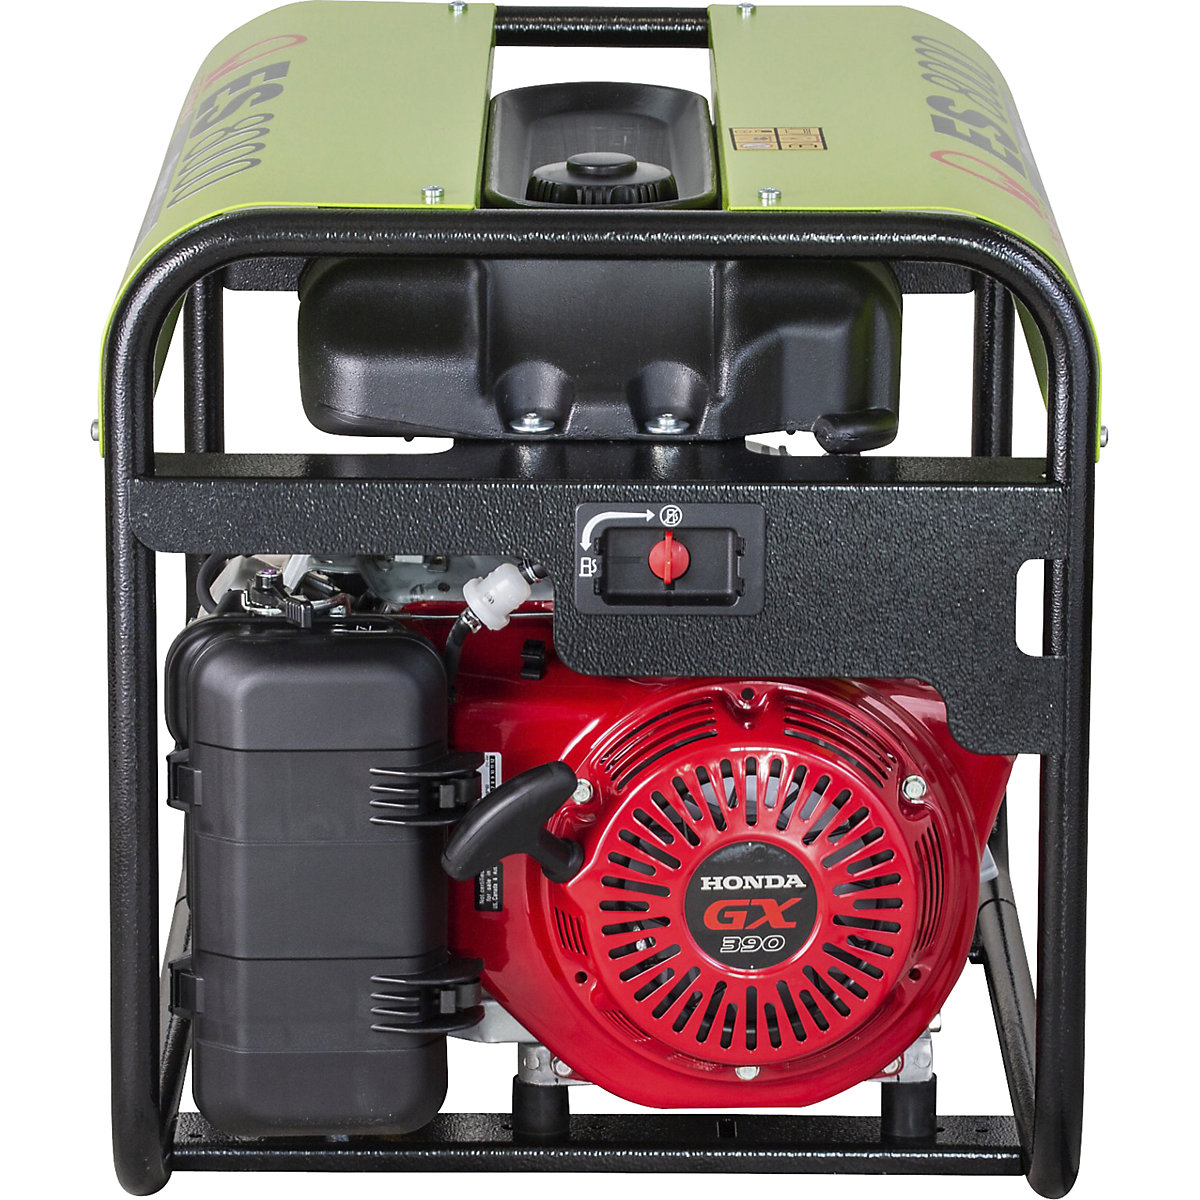 Stroomgenerator Es-serie – benzine, 230 V – Pramac (Productafbeelding 3)-2